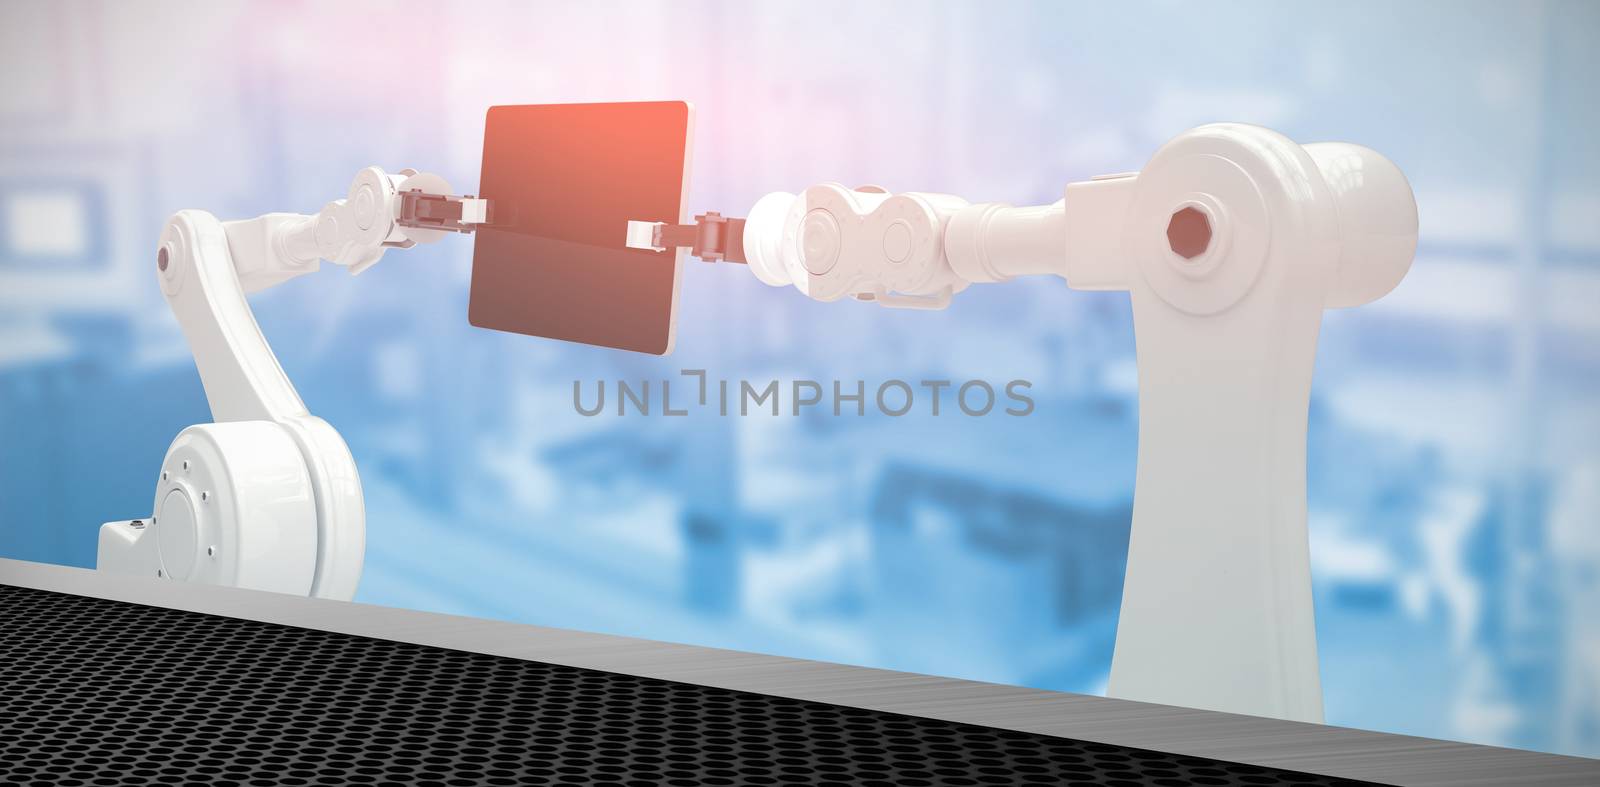 Composite image of digital composite image of robots and digital tablet 3d by Wavebreakmedia